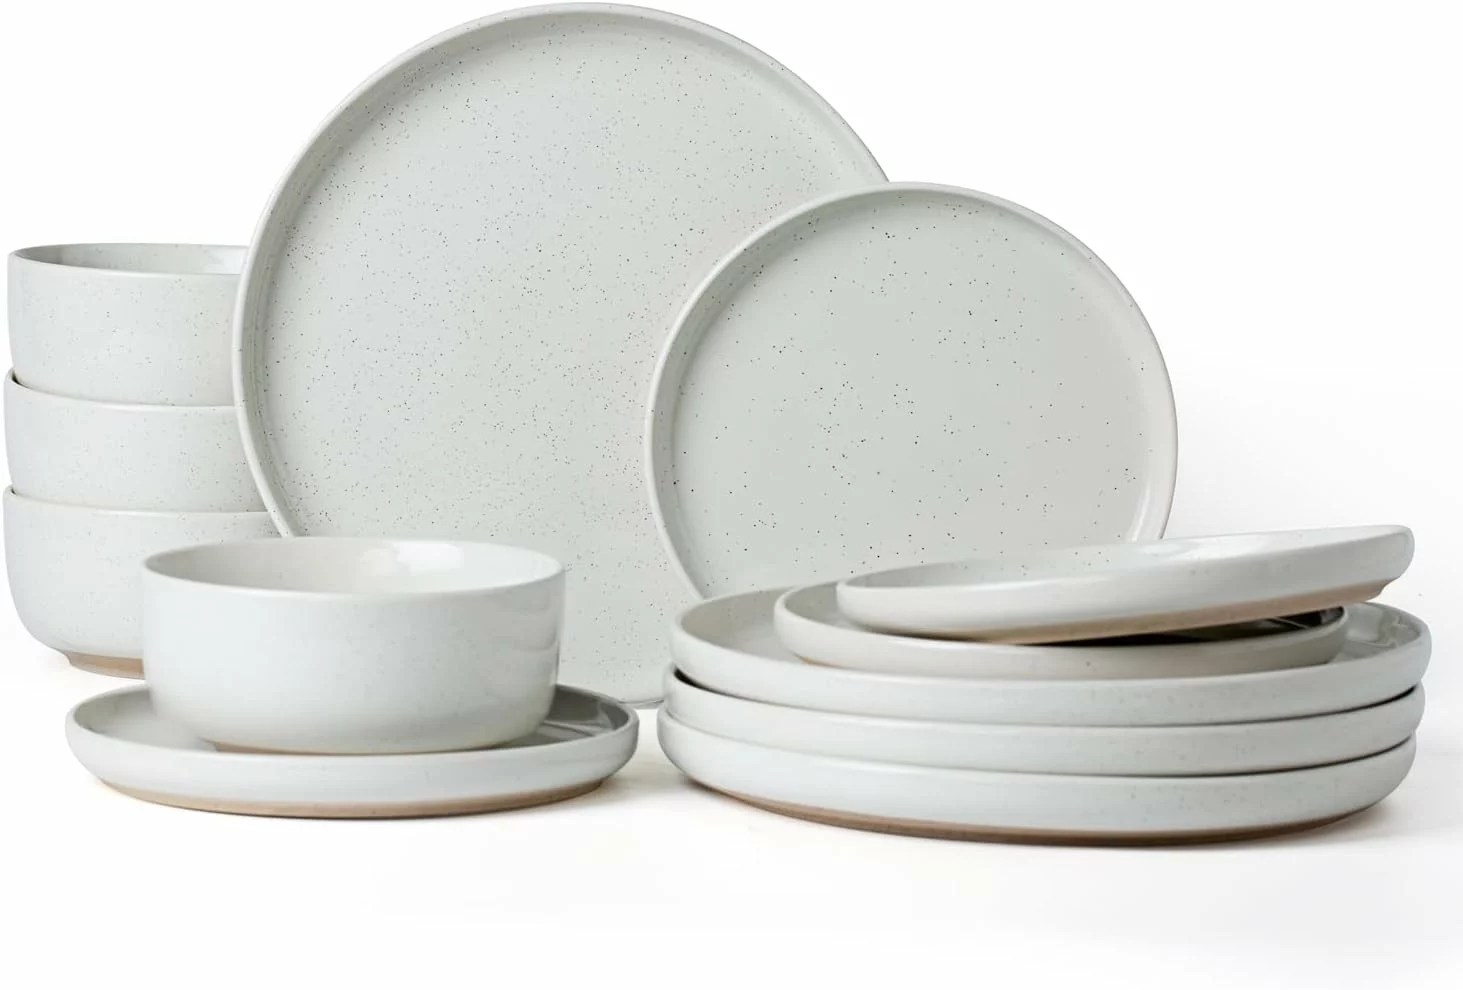 famiware plates and bowls